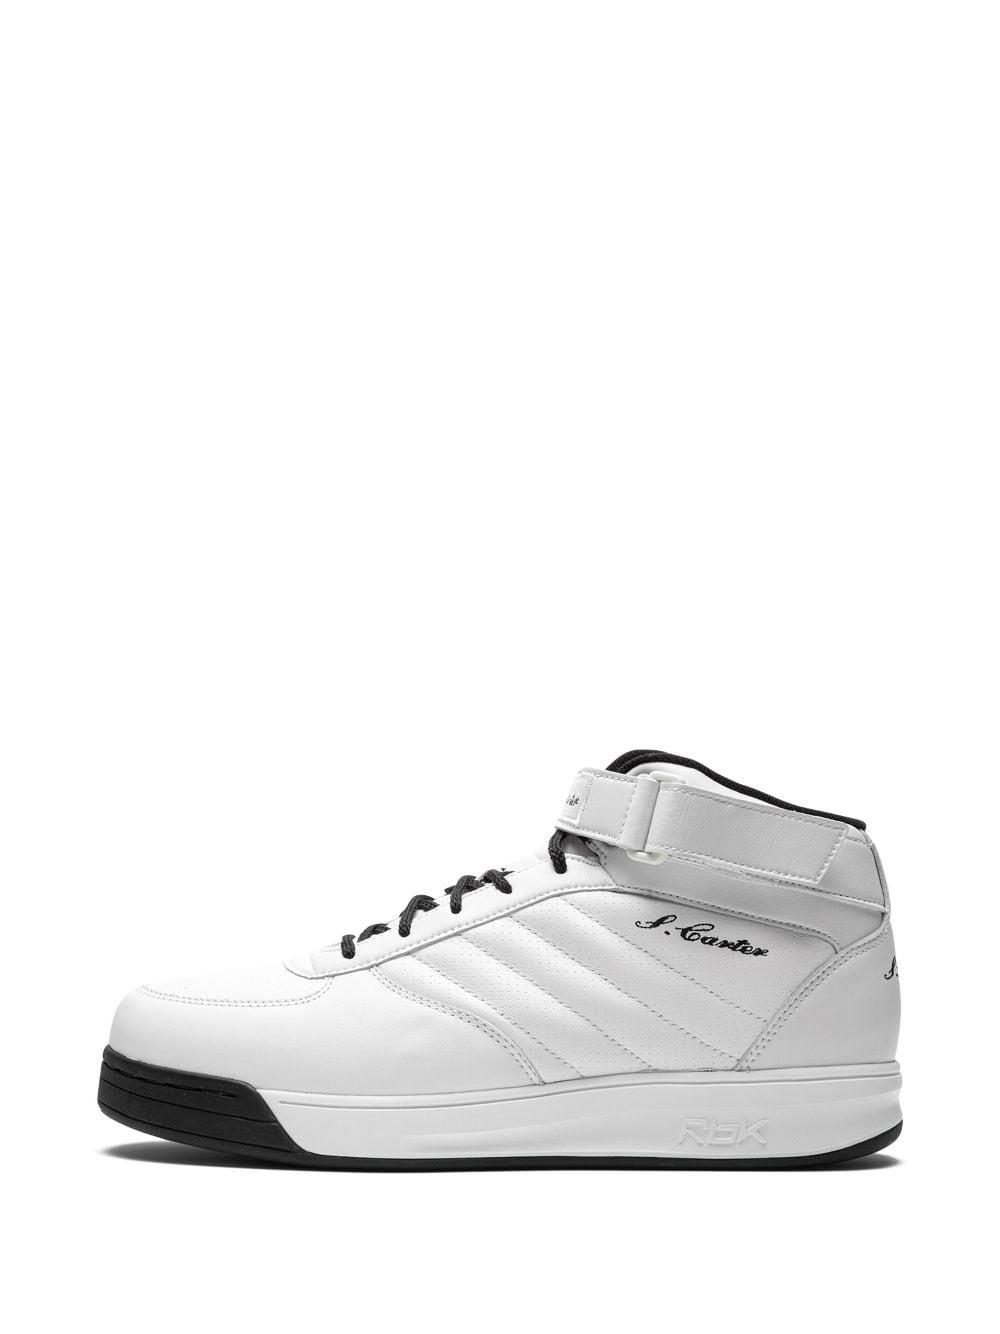 Reebok S. Carter "white/black" Sneakers for | Lyst